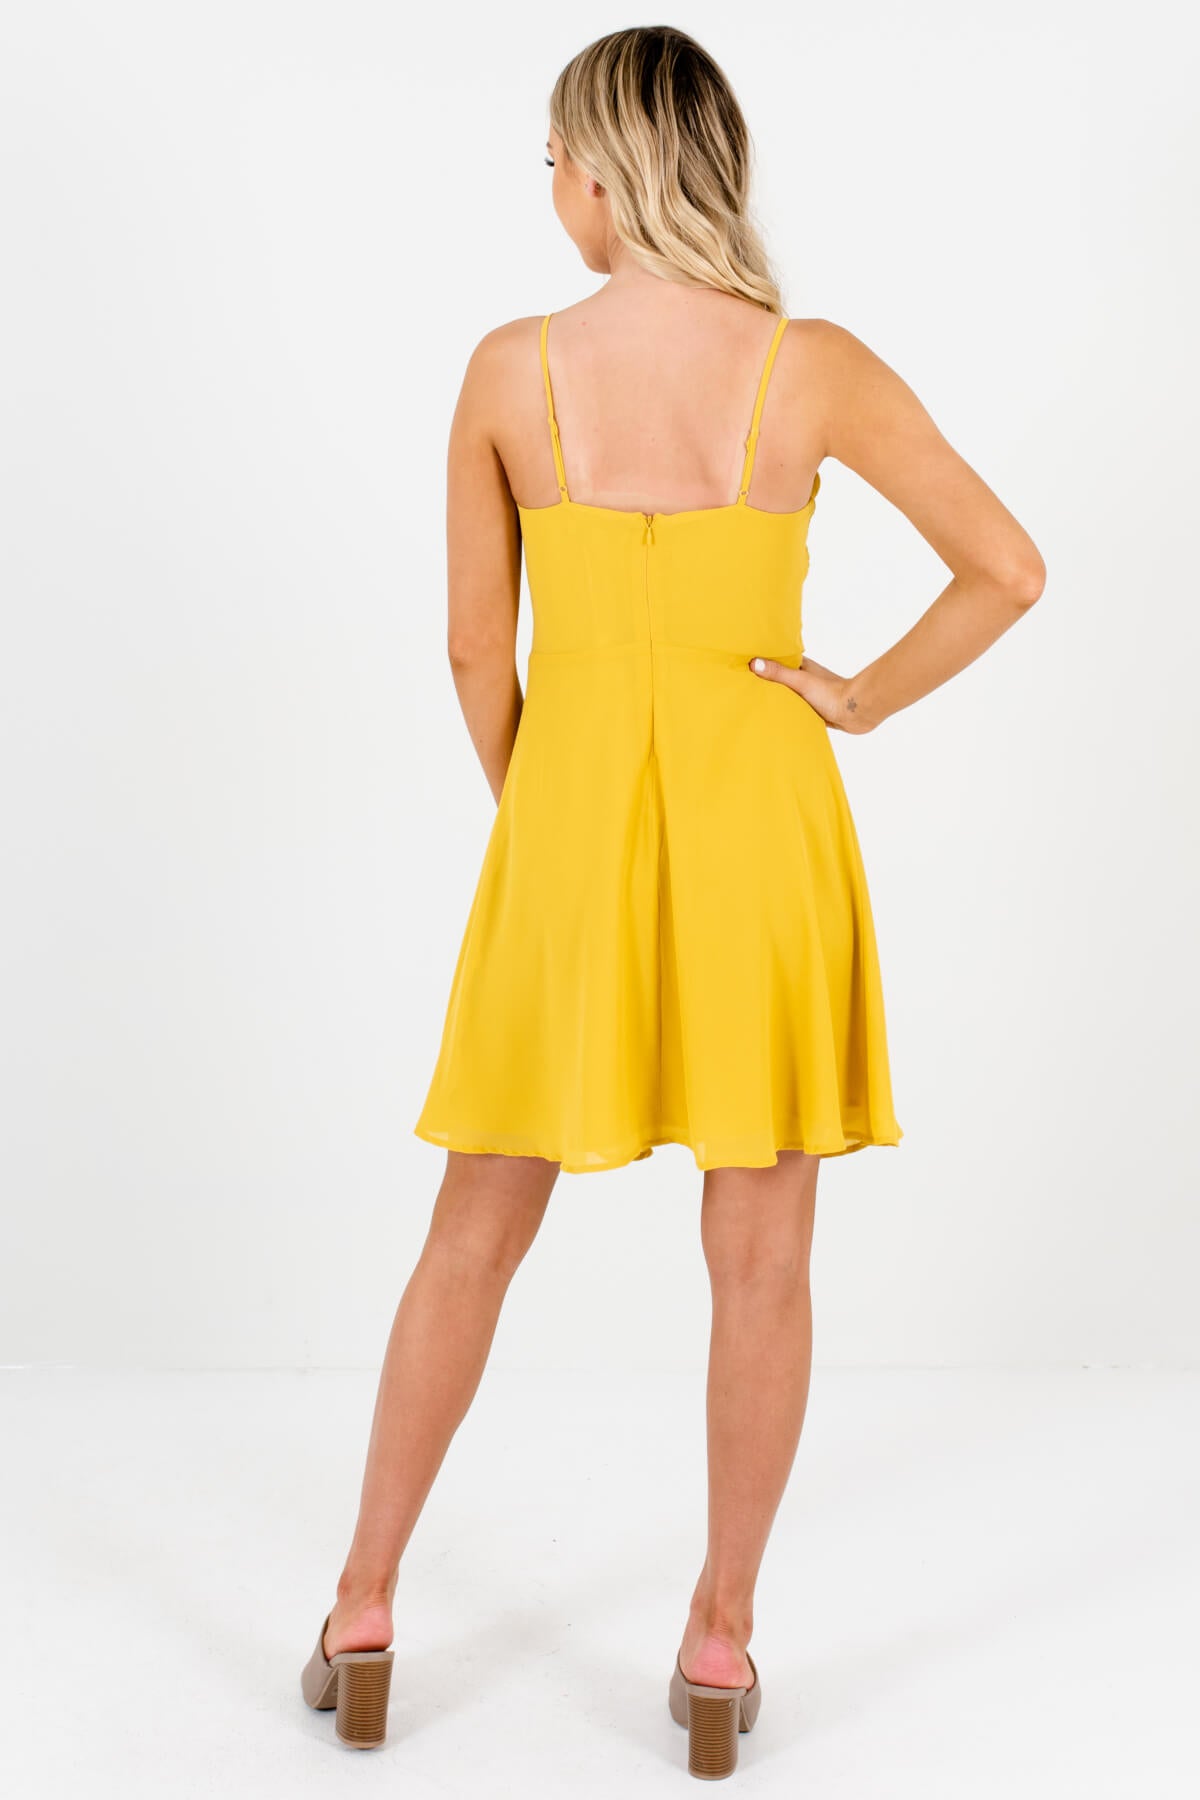 Women's Yellow Adjustable Spaghetti Strap Boutique Mini Dress